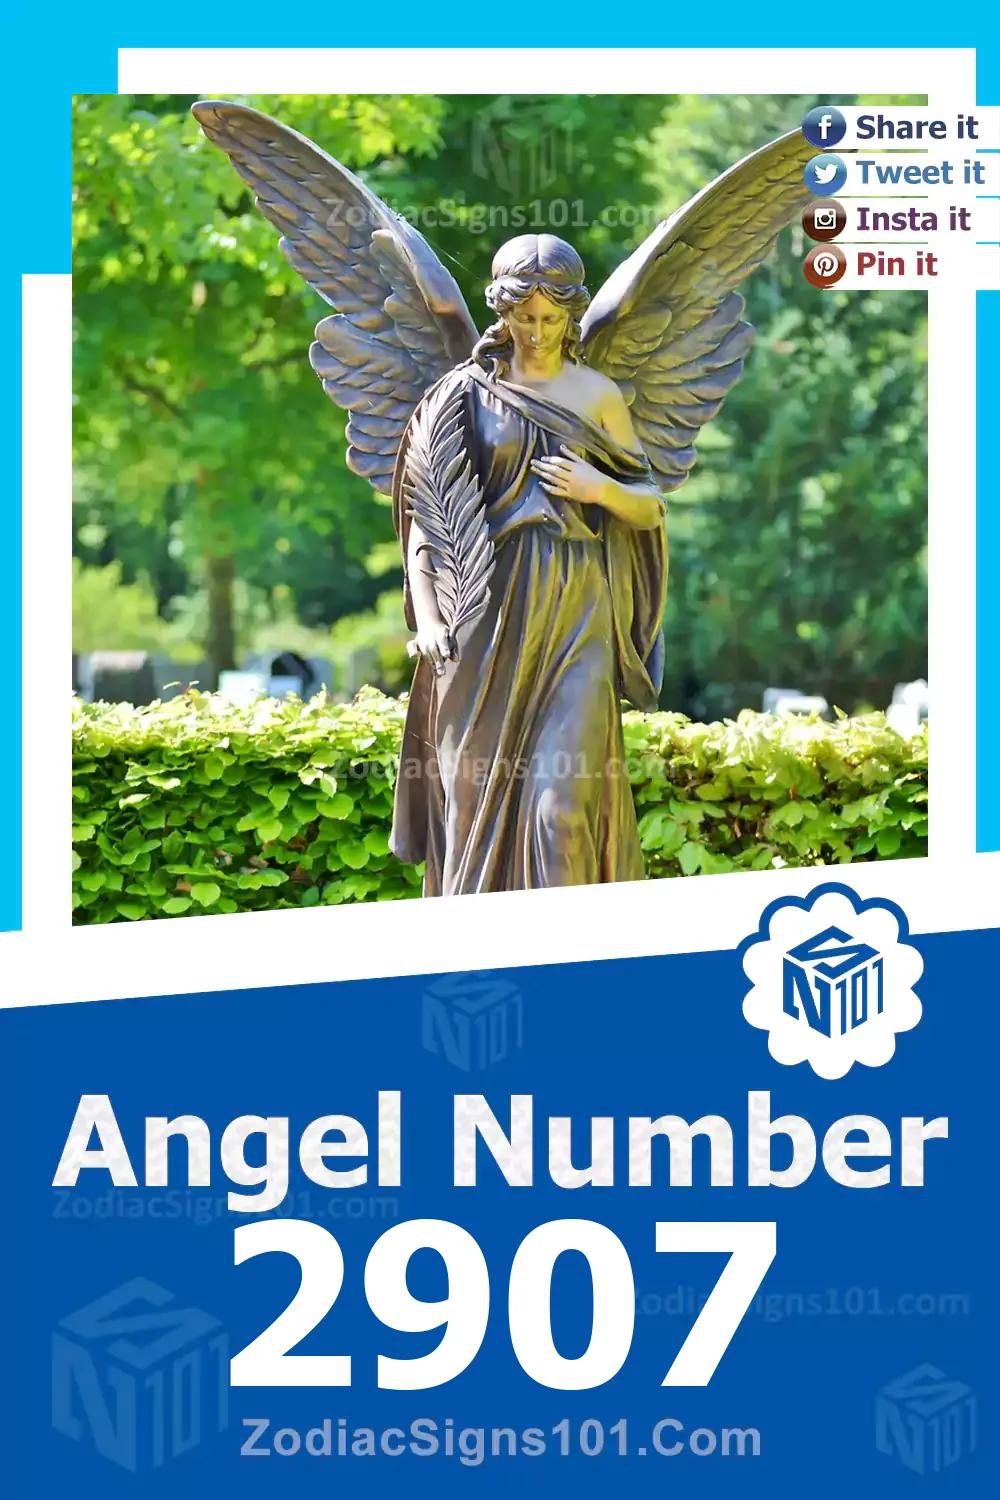 2907-Angel-Number-Meaning.jpg